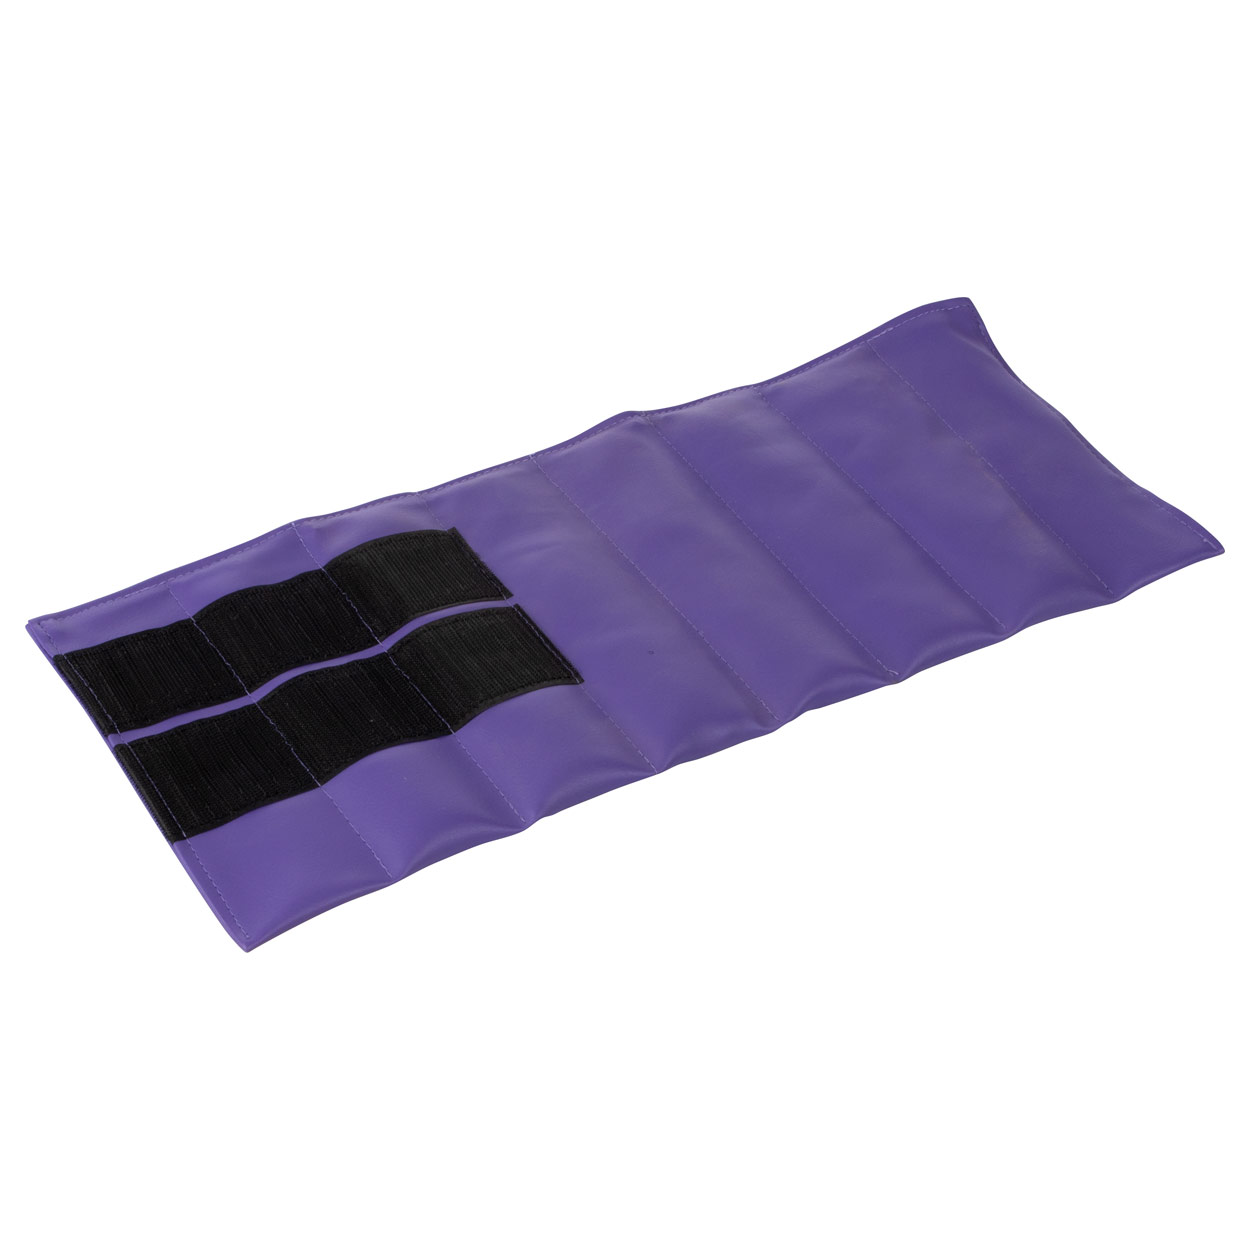 with piece kg 48x20 buy Weight purple, strips, | online Velcro cm, Sport-Tec 2 bands